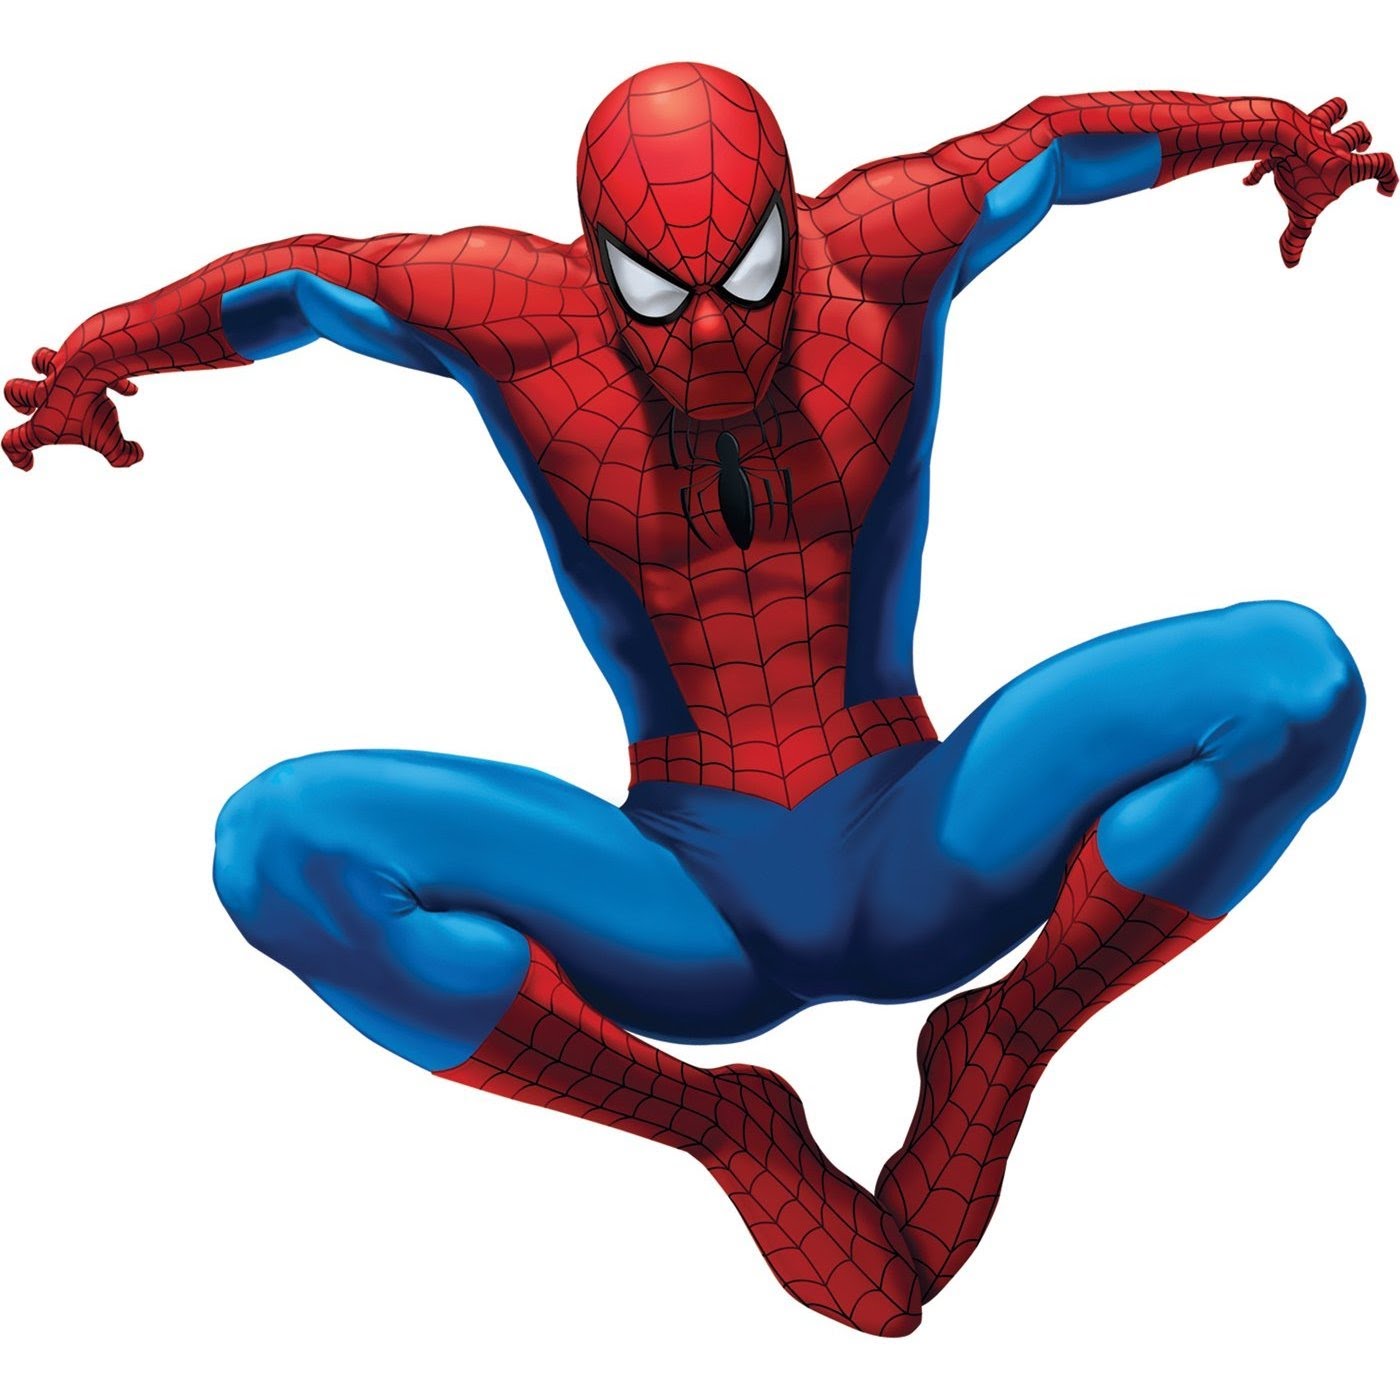 Free Download Spiderman Cartoon HD Image Wallpaper 11384 HD [1400x1400] For Your Desktop, Mobile & Tablet. Explore Spiderman Cartoon Wallpaper. Spider Wallpaper, The Amazing Spider Man Wallpaper, Spider Man Wallpaper